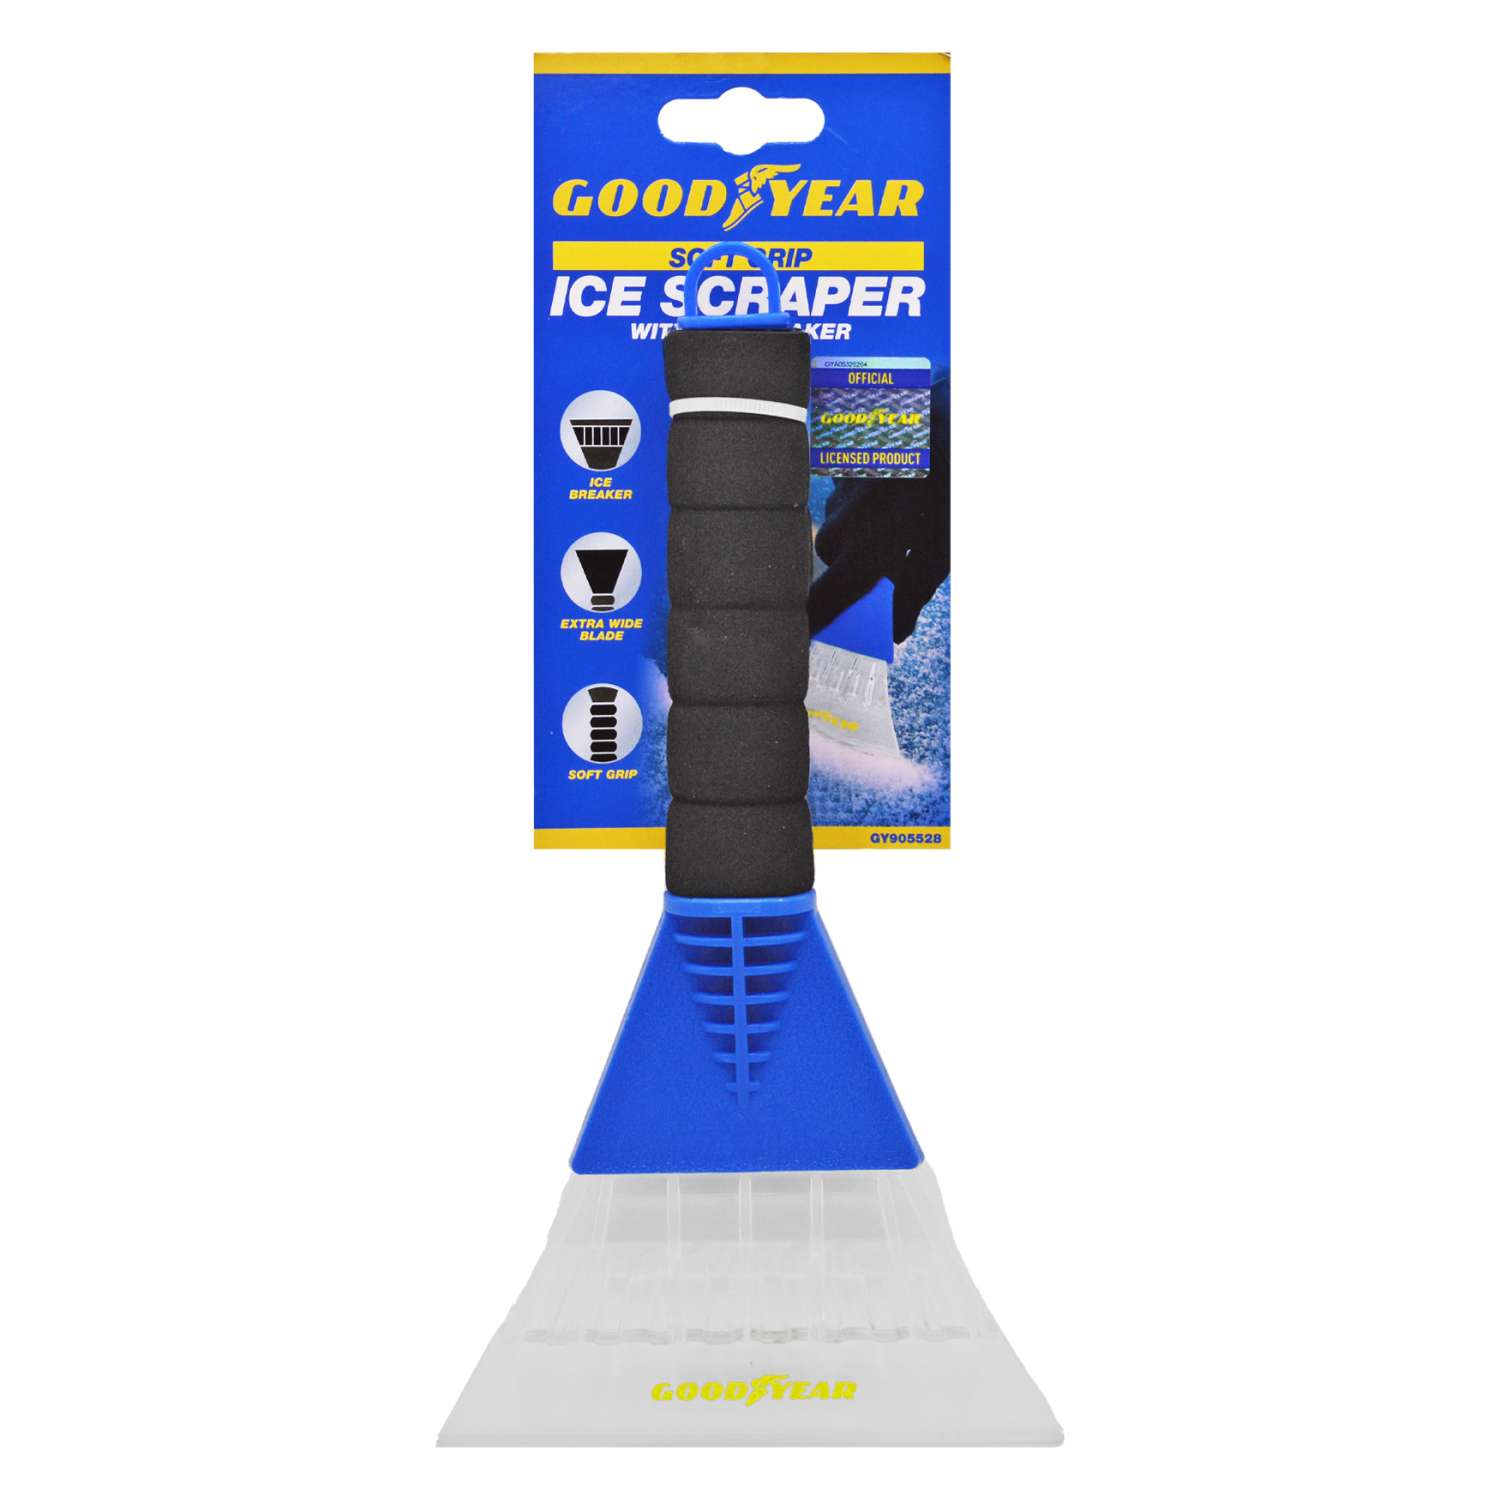 Wholesale Goodyear Ice Scraper with Soft Grip - Homeware Essentials